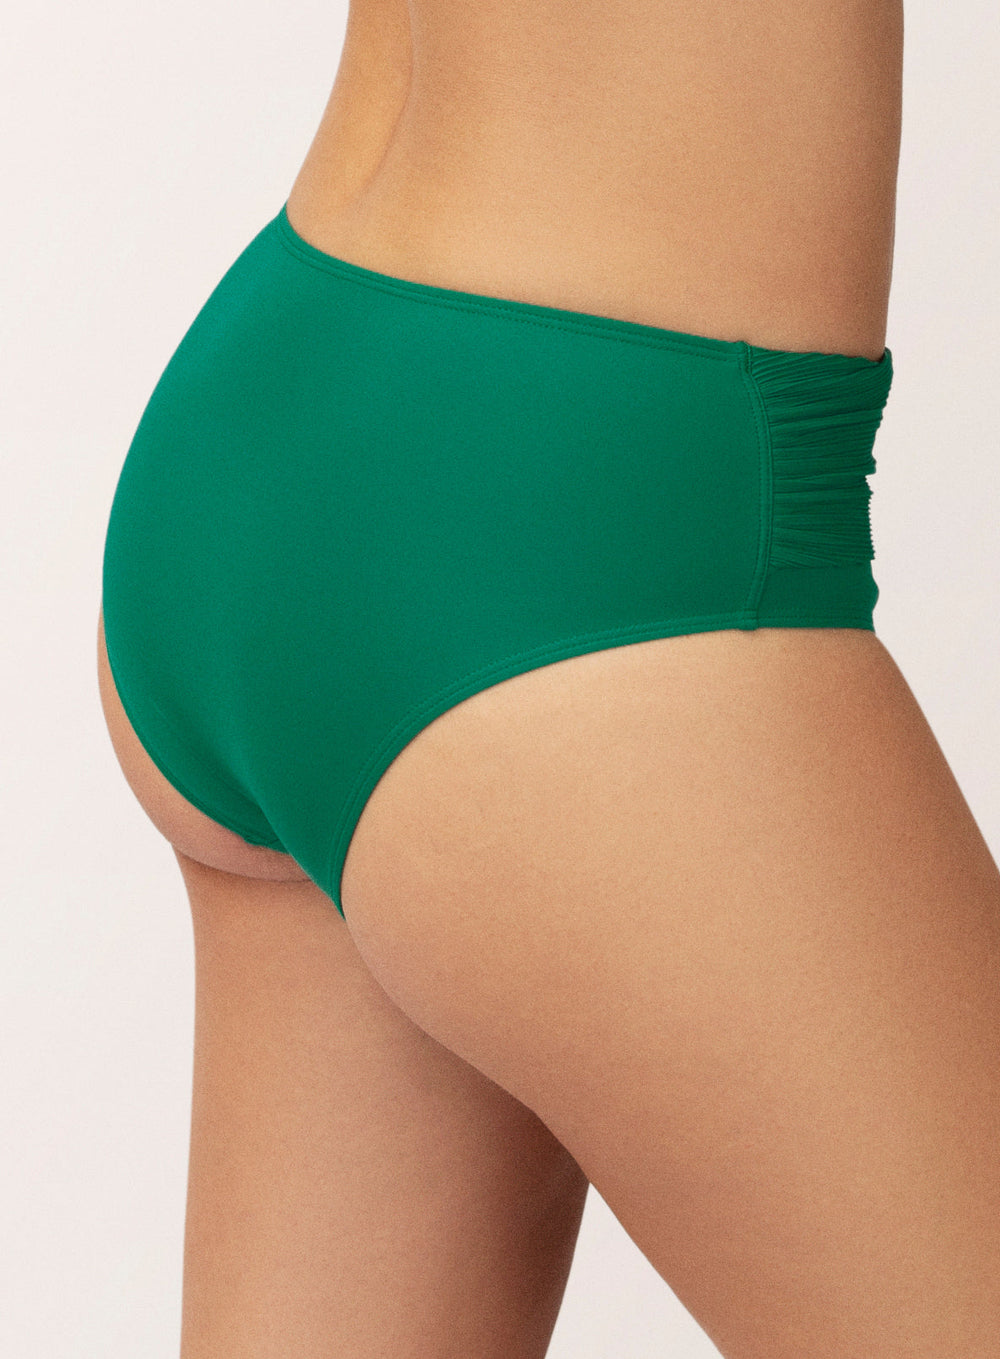 Empreinte - Braguita de bikini con estructura profunda Braguita de bikini de talle alto verde Empreinte Trajes de baño